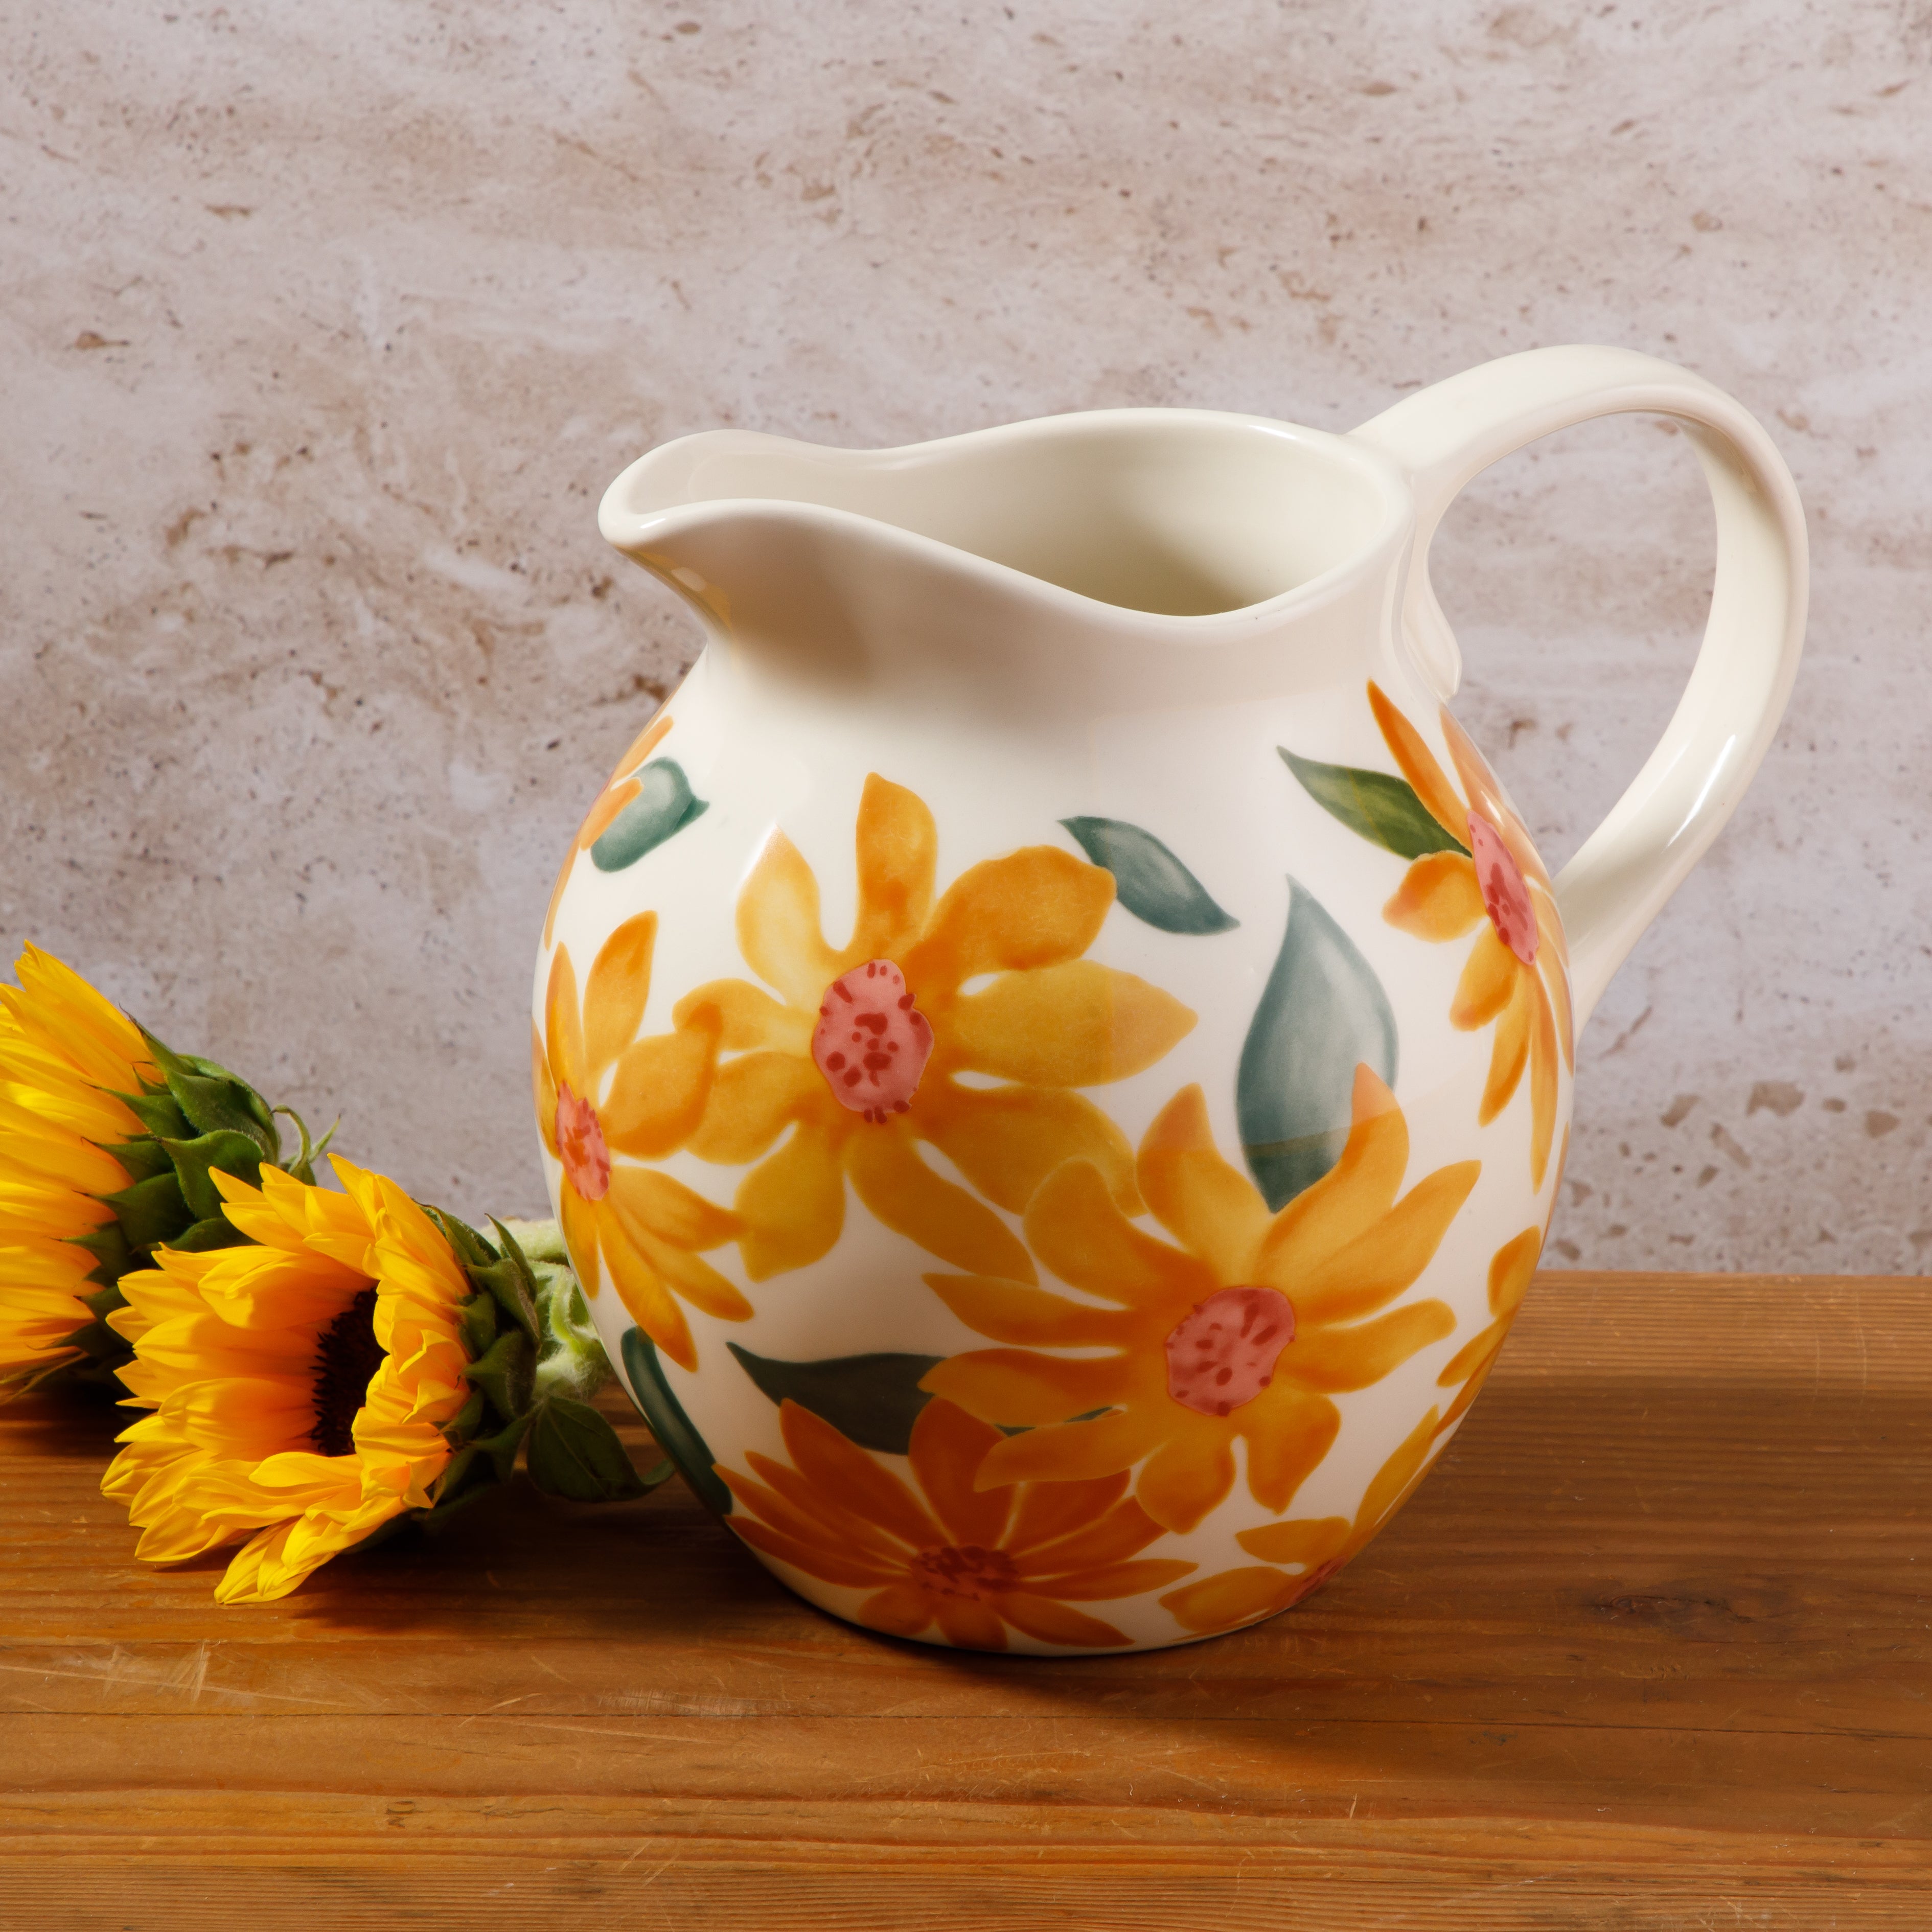 Bloomhouse Sunnyflower 2.6-Quart Hand-Painted Floral Stoneware Pitcher